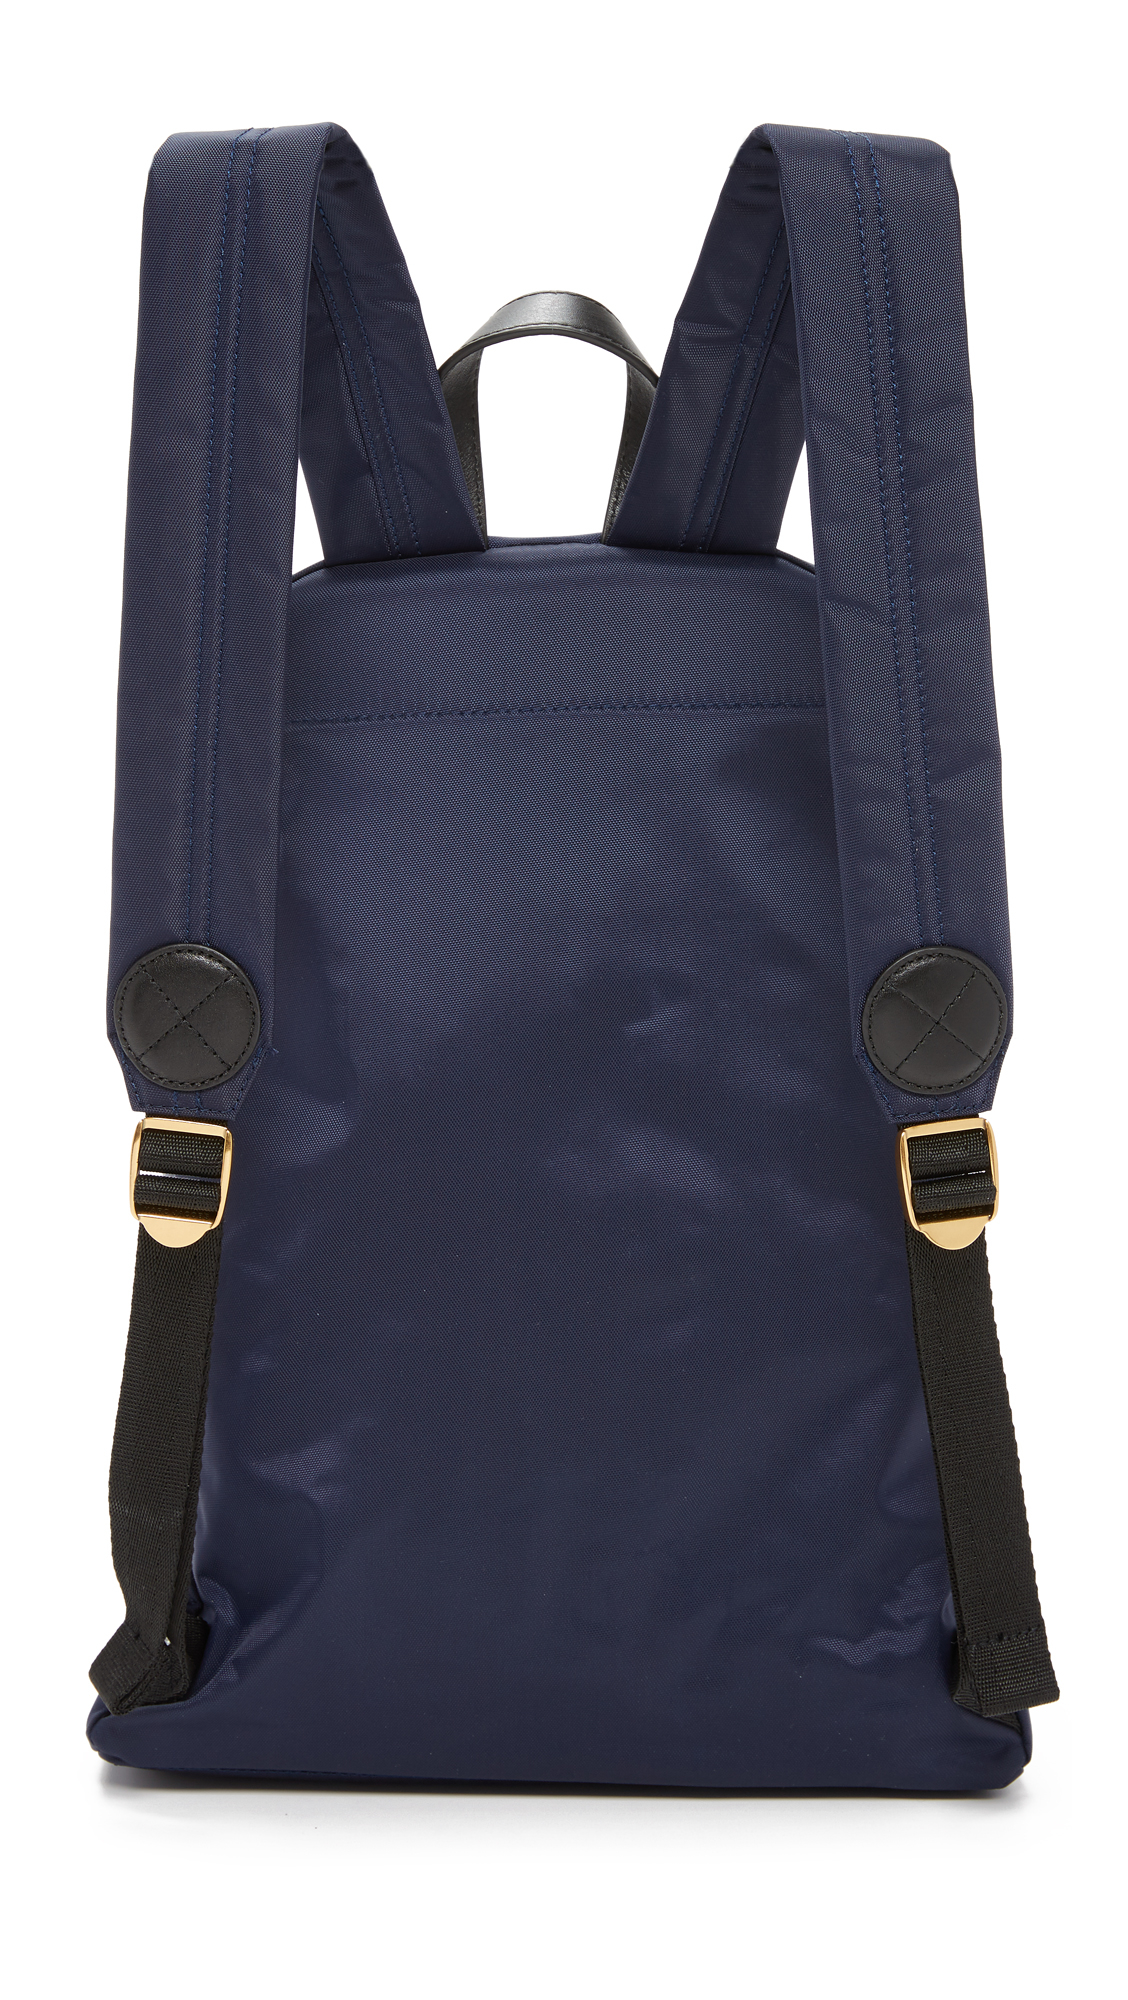 Lyst - Marc Jacobs Nylon Biker Backpack in Blue